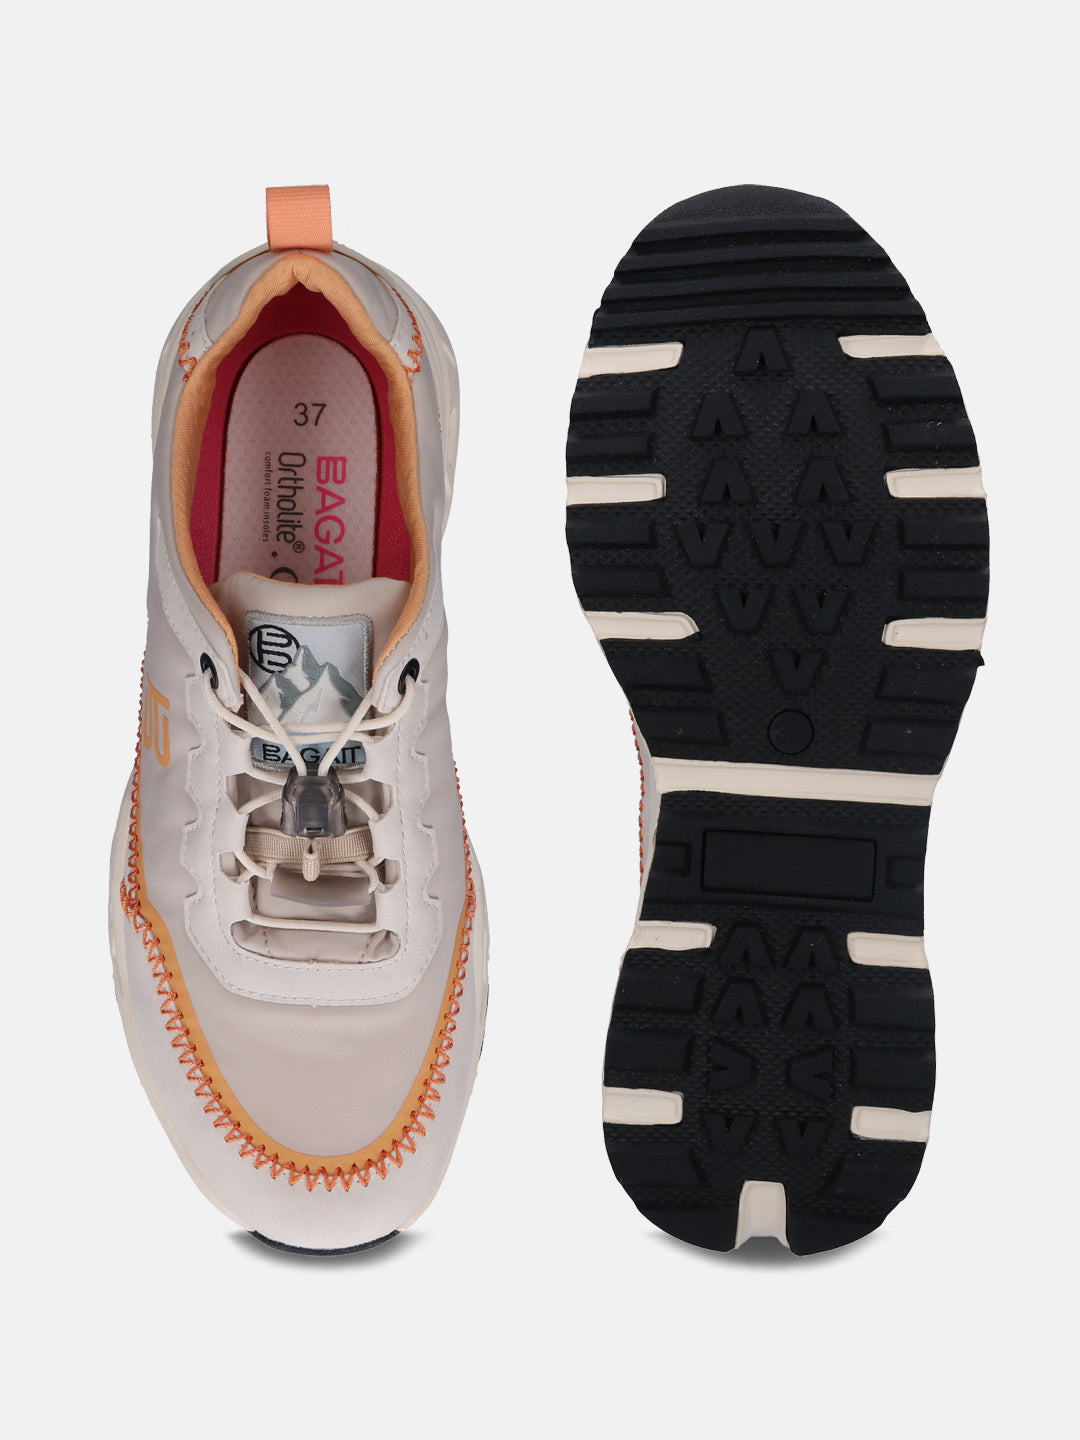 Coaster Off White & Orange Sneakers - BAGATT